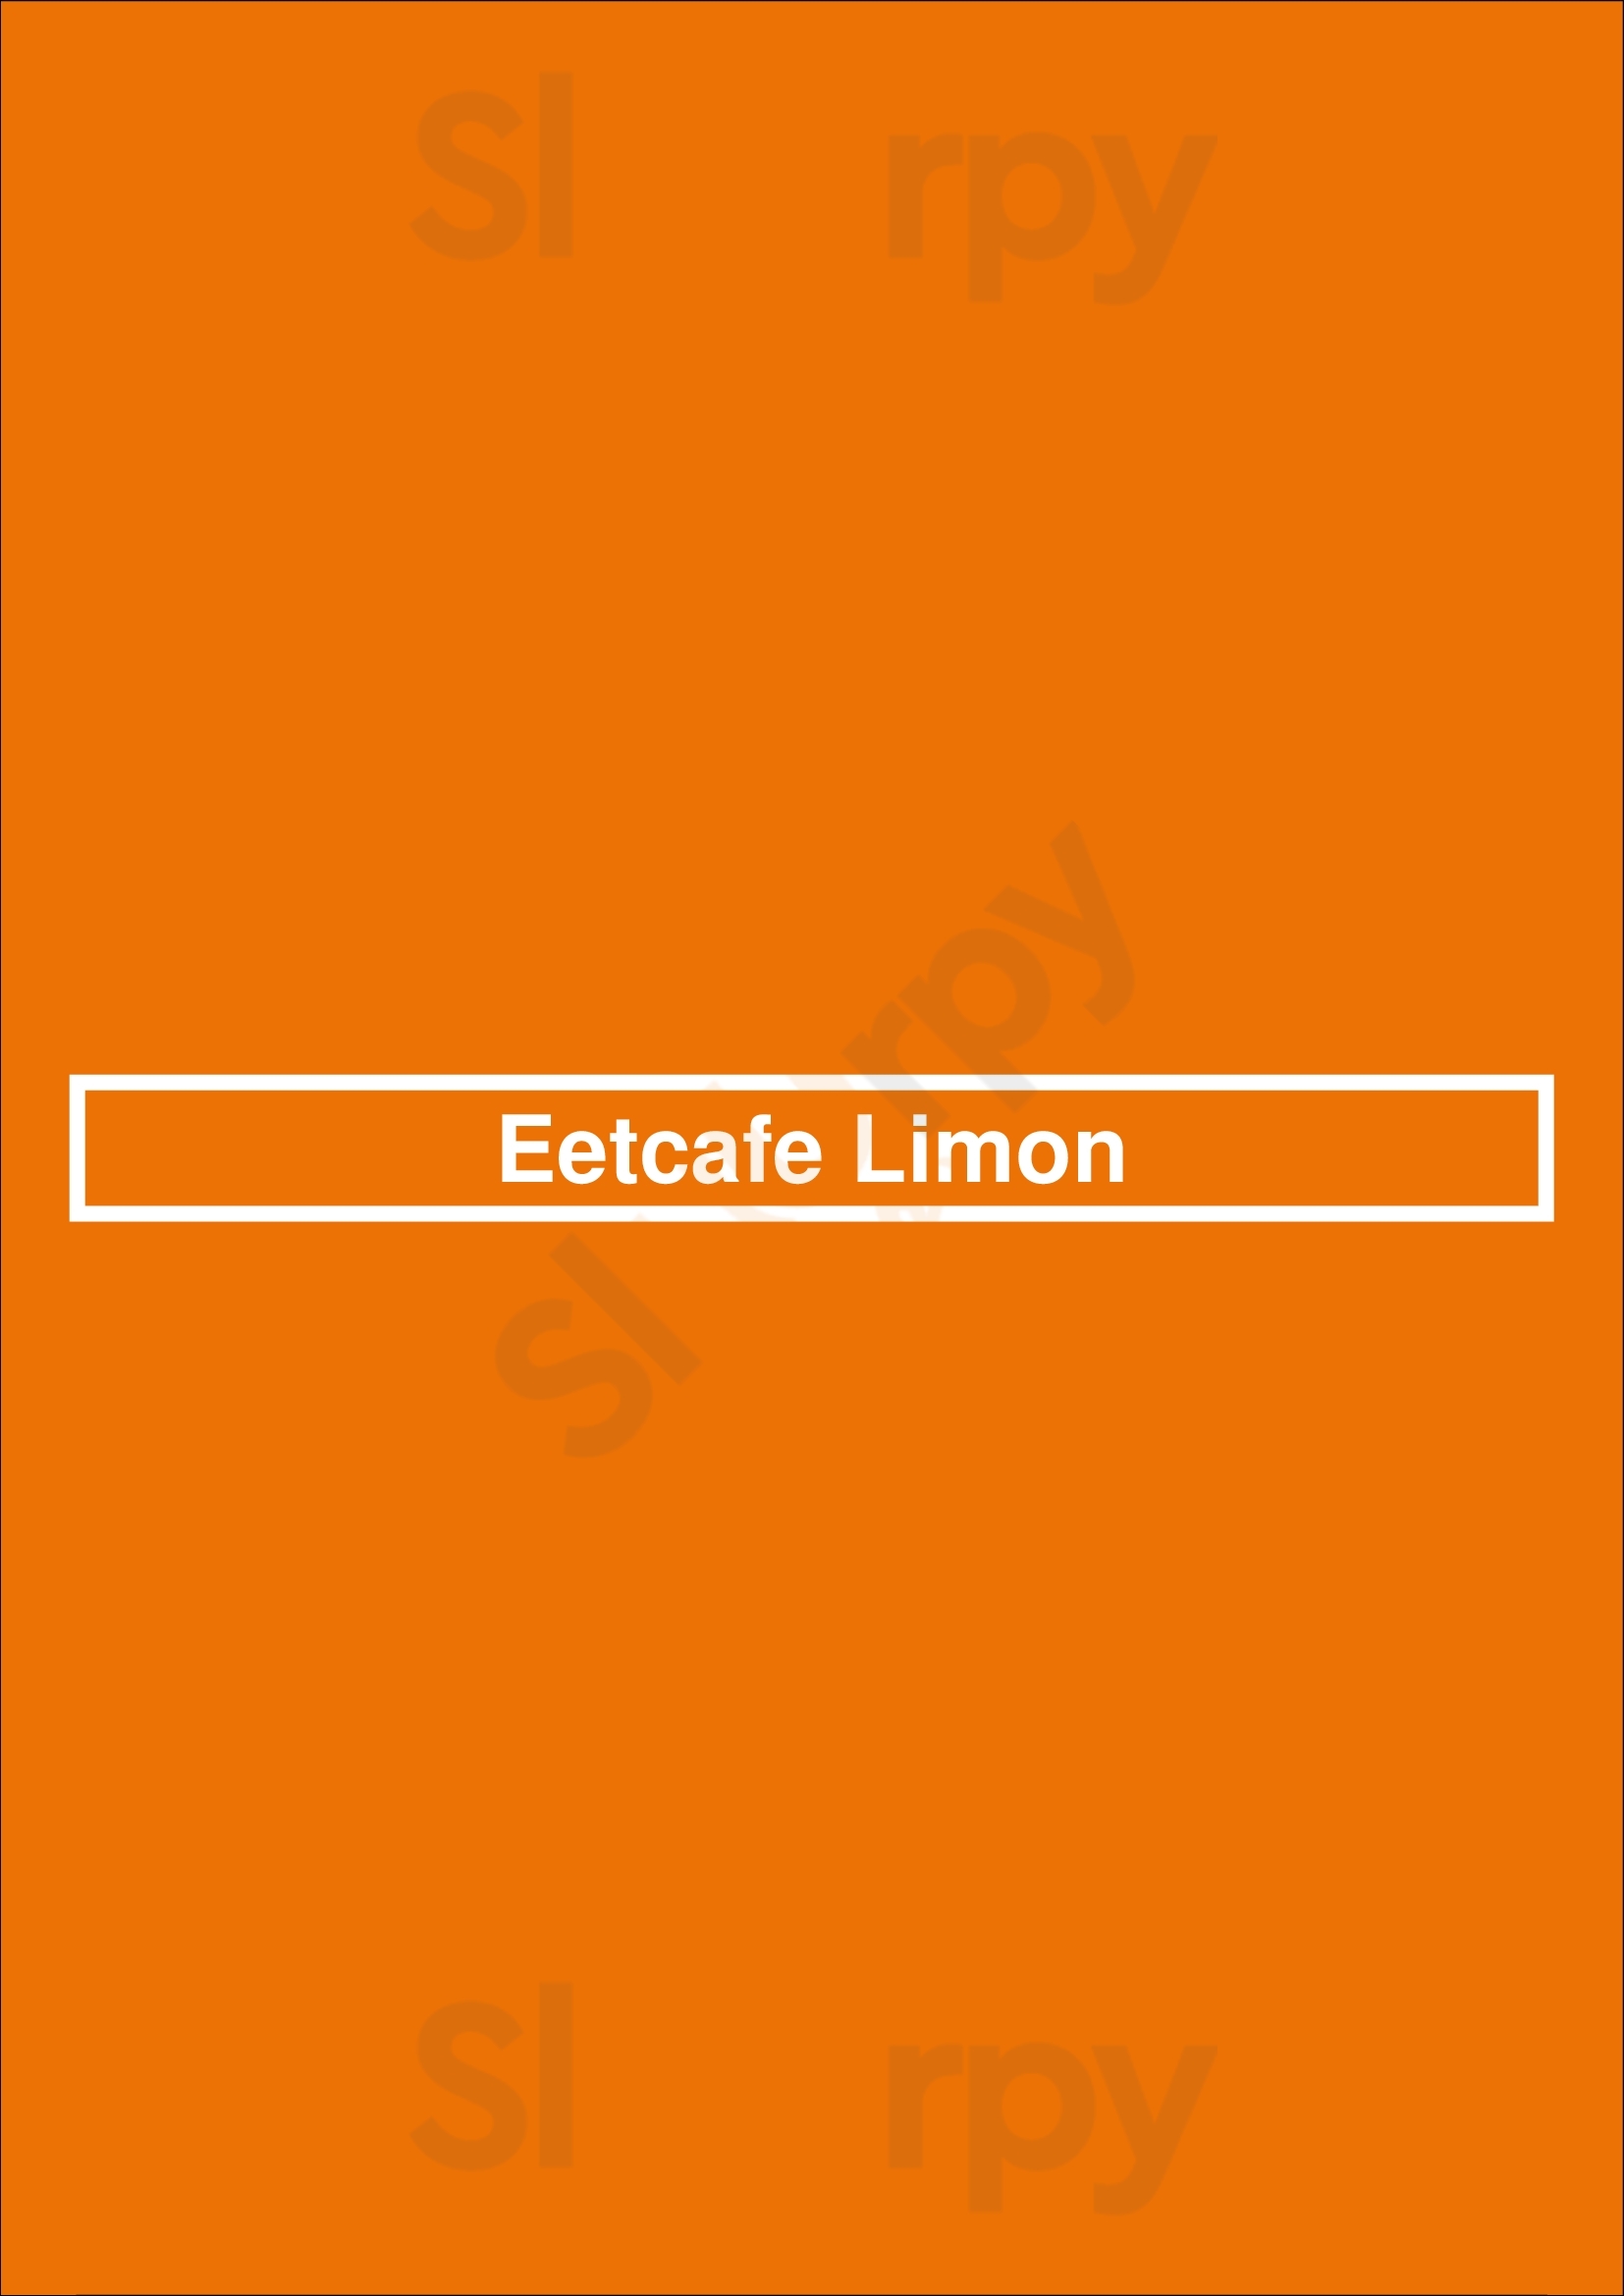 Eetcafe Limon Rotterdam Menu - 1